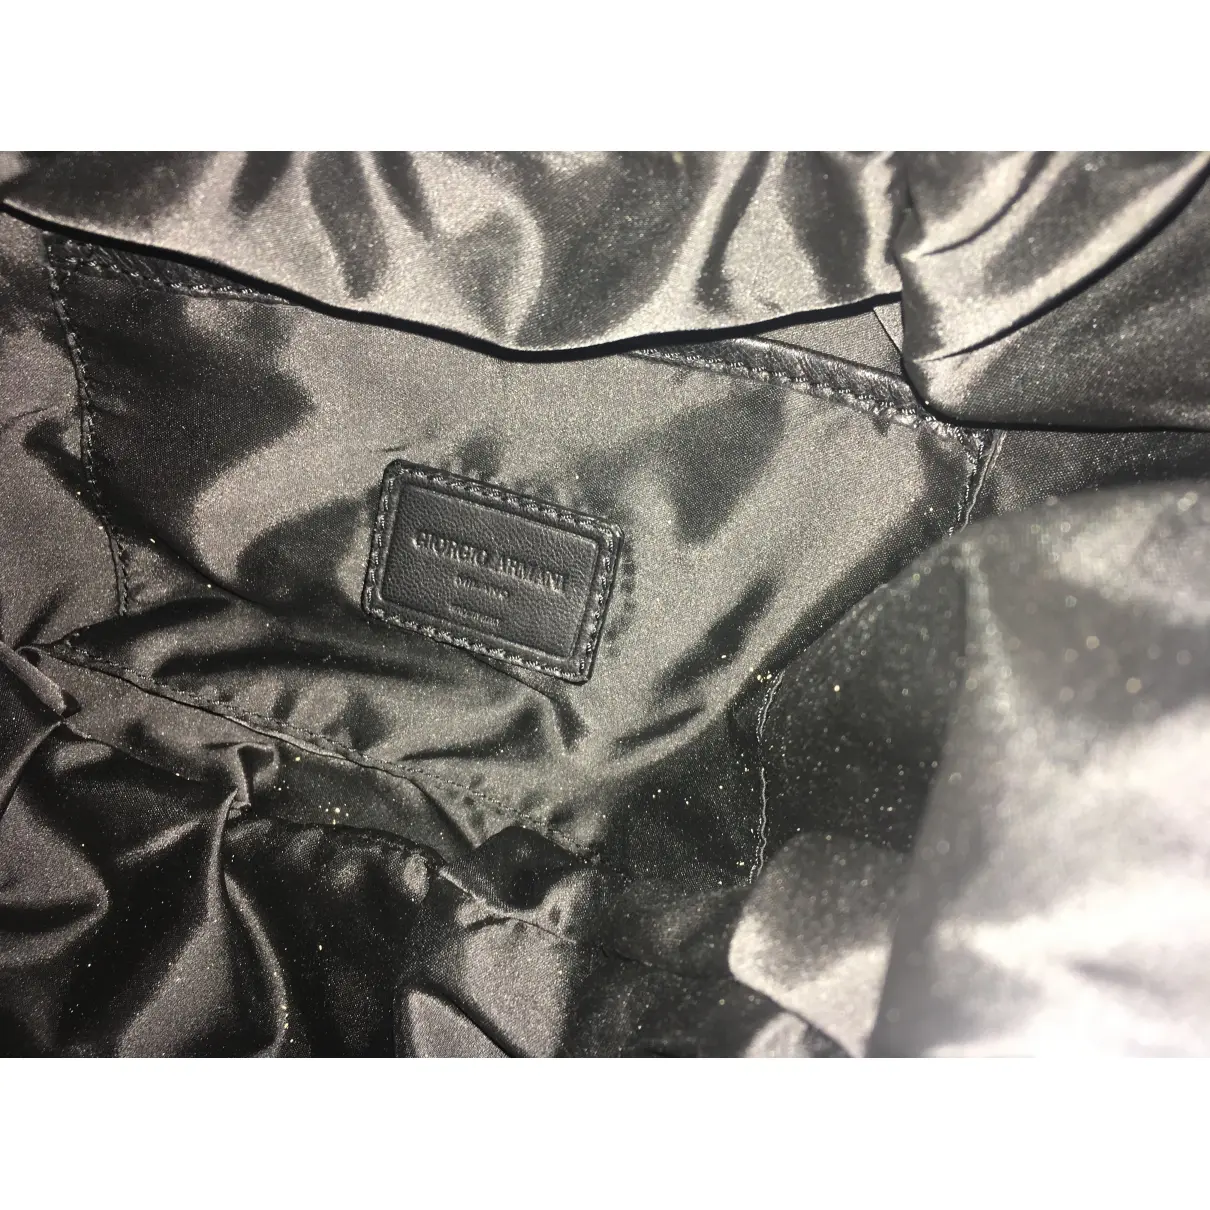 Buy Giorgio Armani Silk handbag online - Vintage